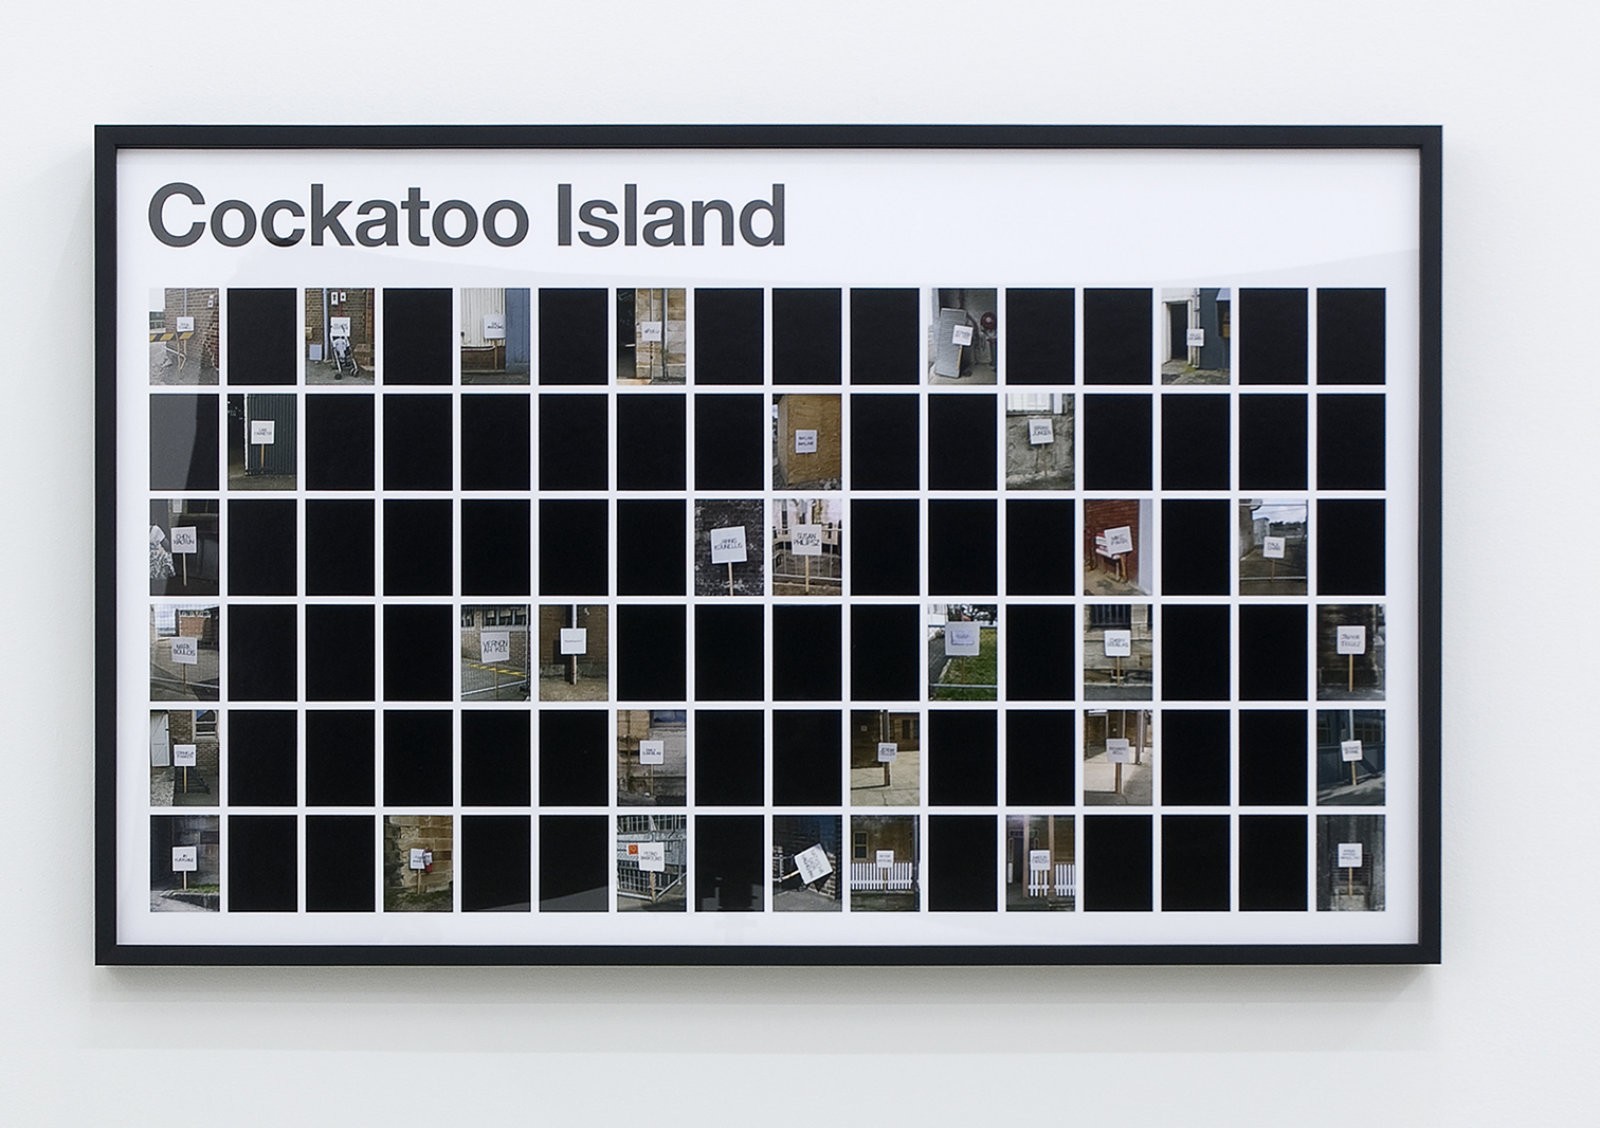 Ron Terada, Cockatoo Island, 2009, pigment ink print on archival paper, 26 x 42 in. (66 x 107 cm)